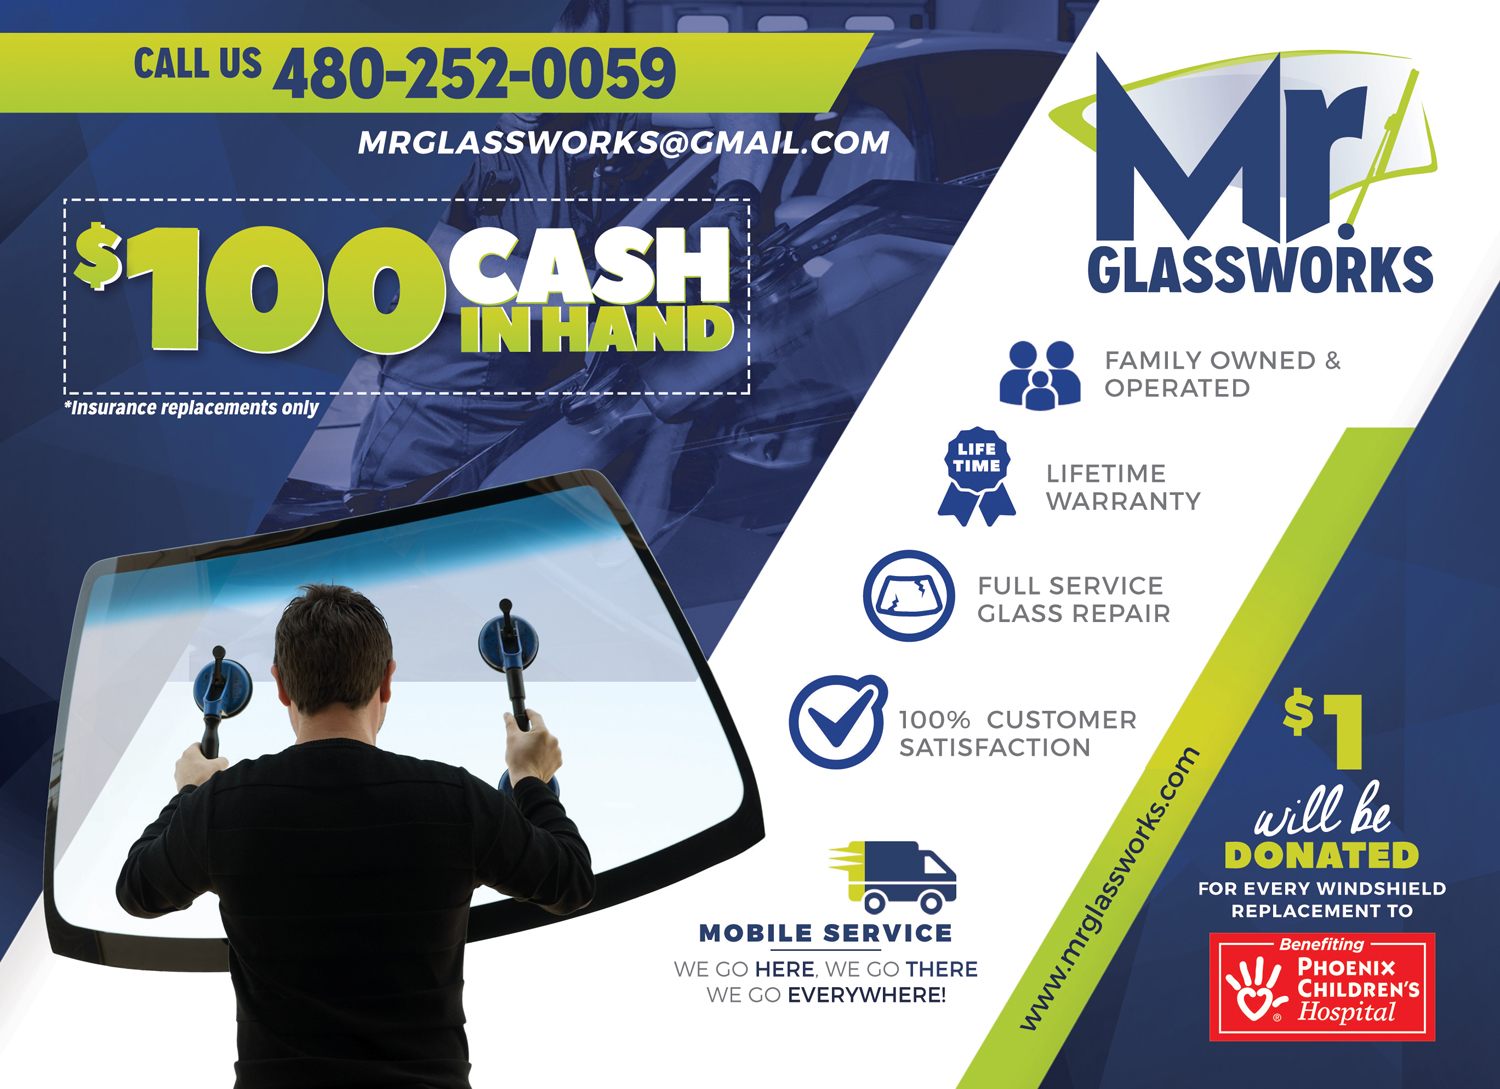 Mr. Glassworks Windshield Replacement $100 Cash Back